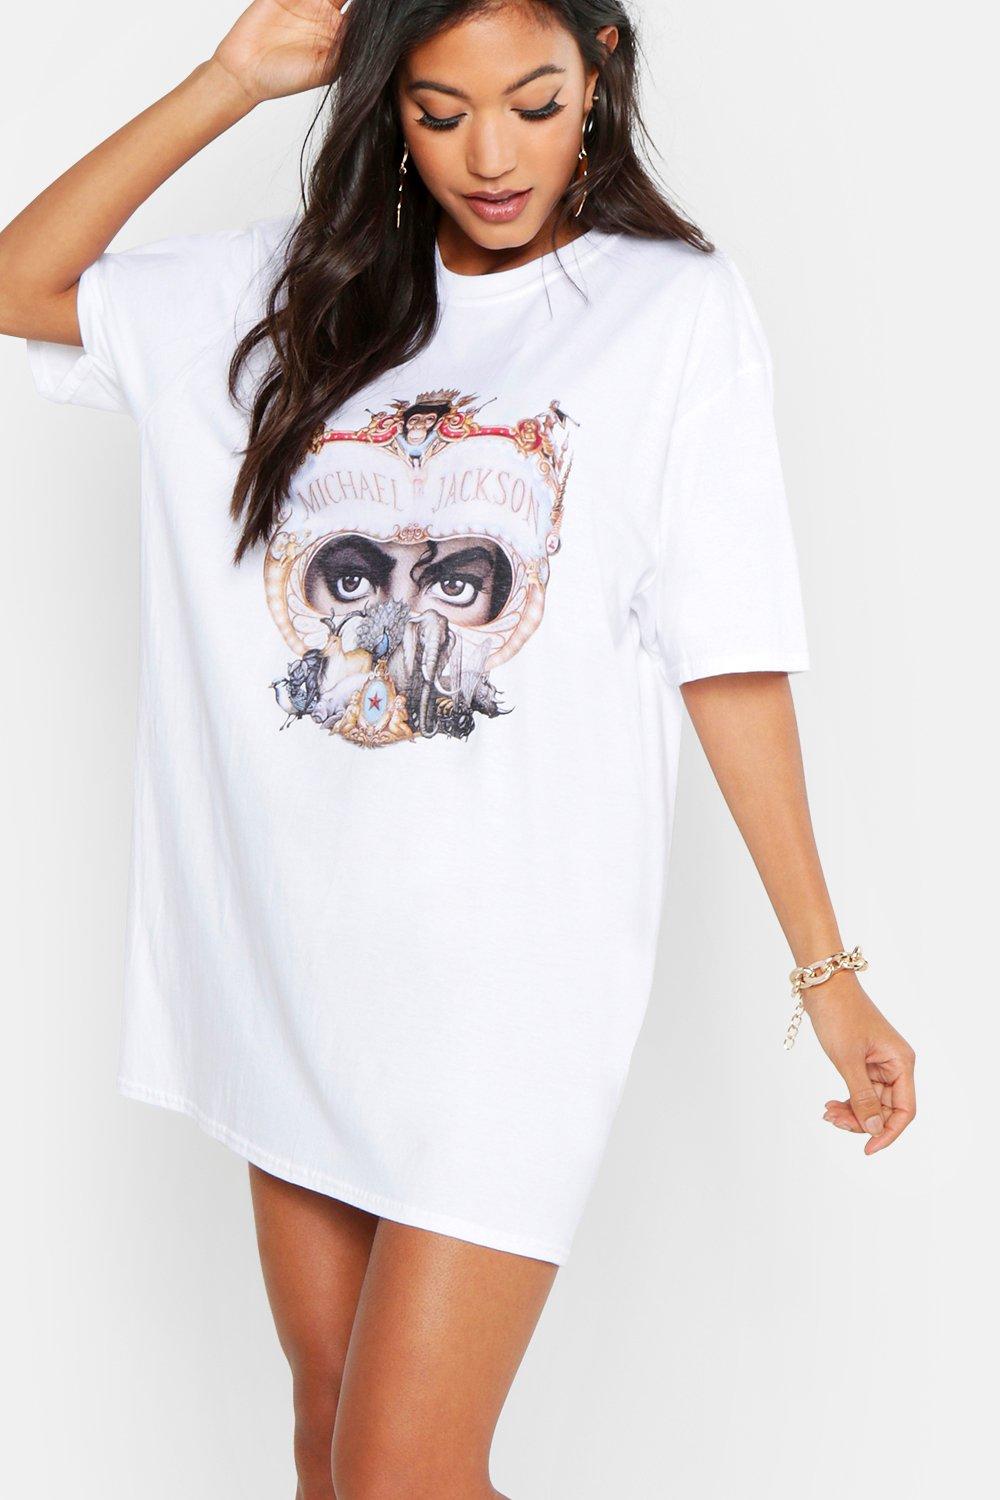 Michael Jackson Mugshot Women's T-Shirt by Digital Reproductions